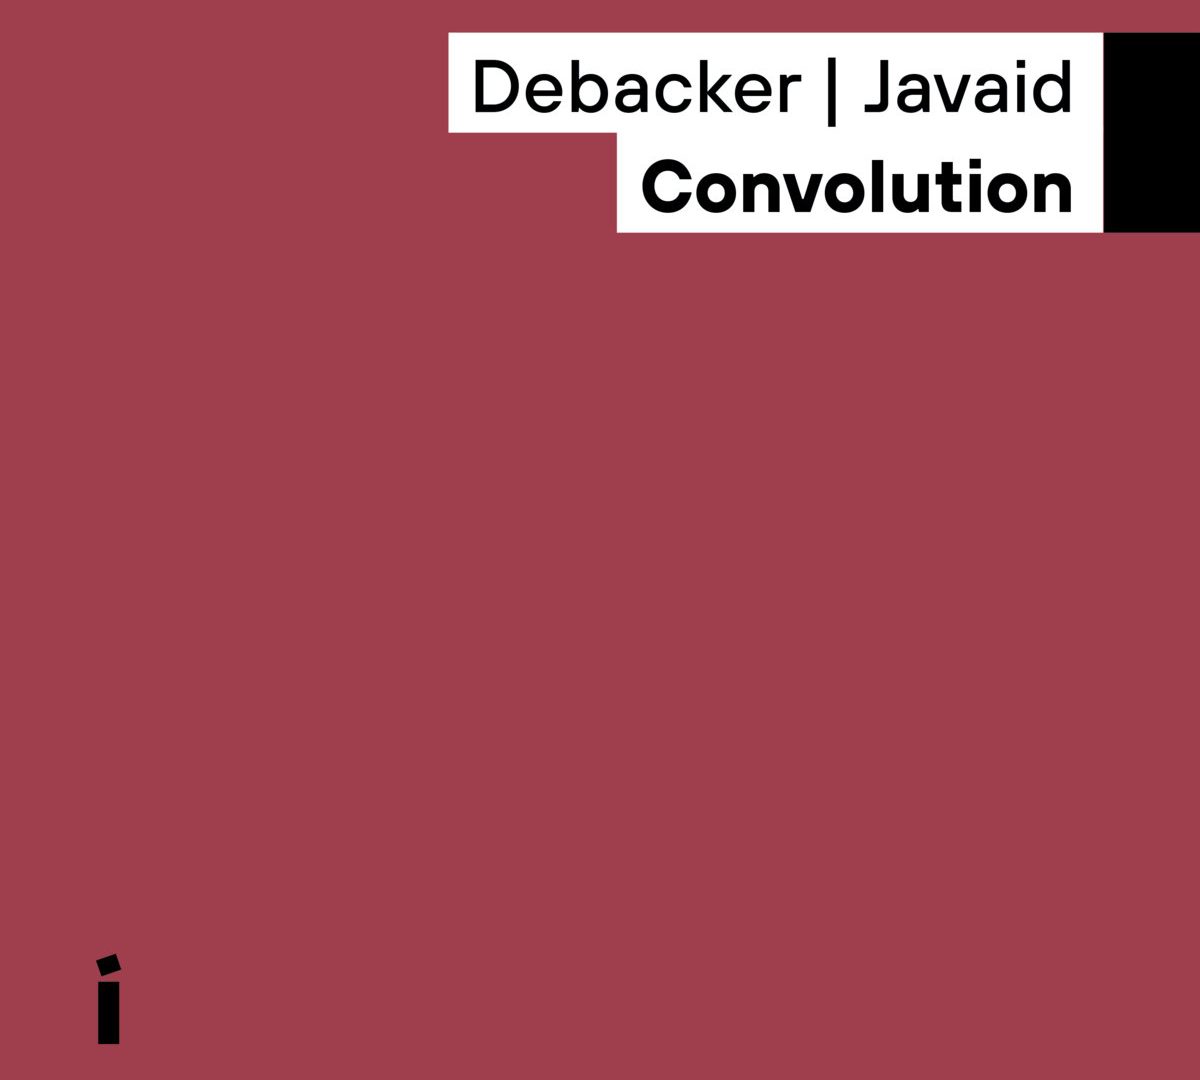 Marlies Debacker, Salim(a) Javaid, LOFT, Convolution, IMPAKT